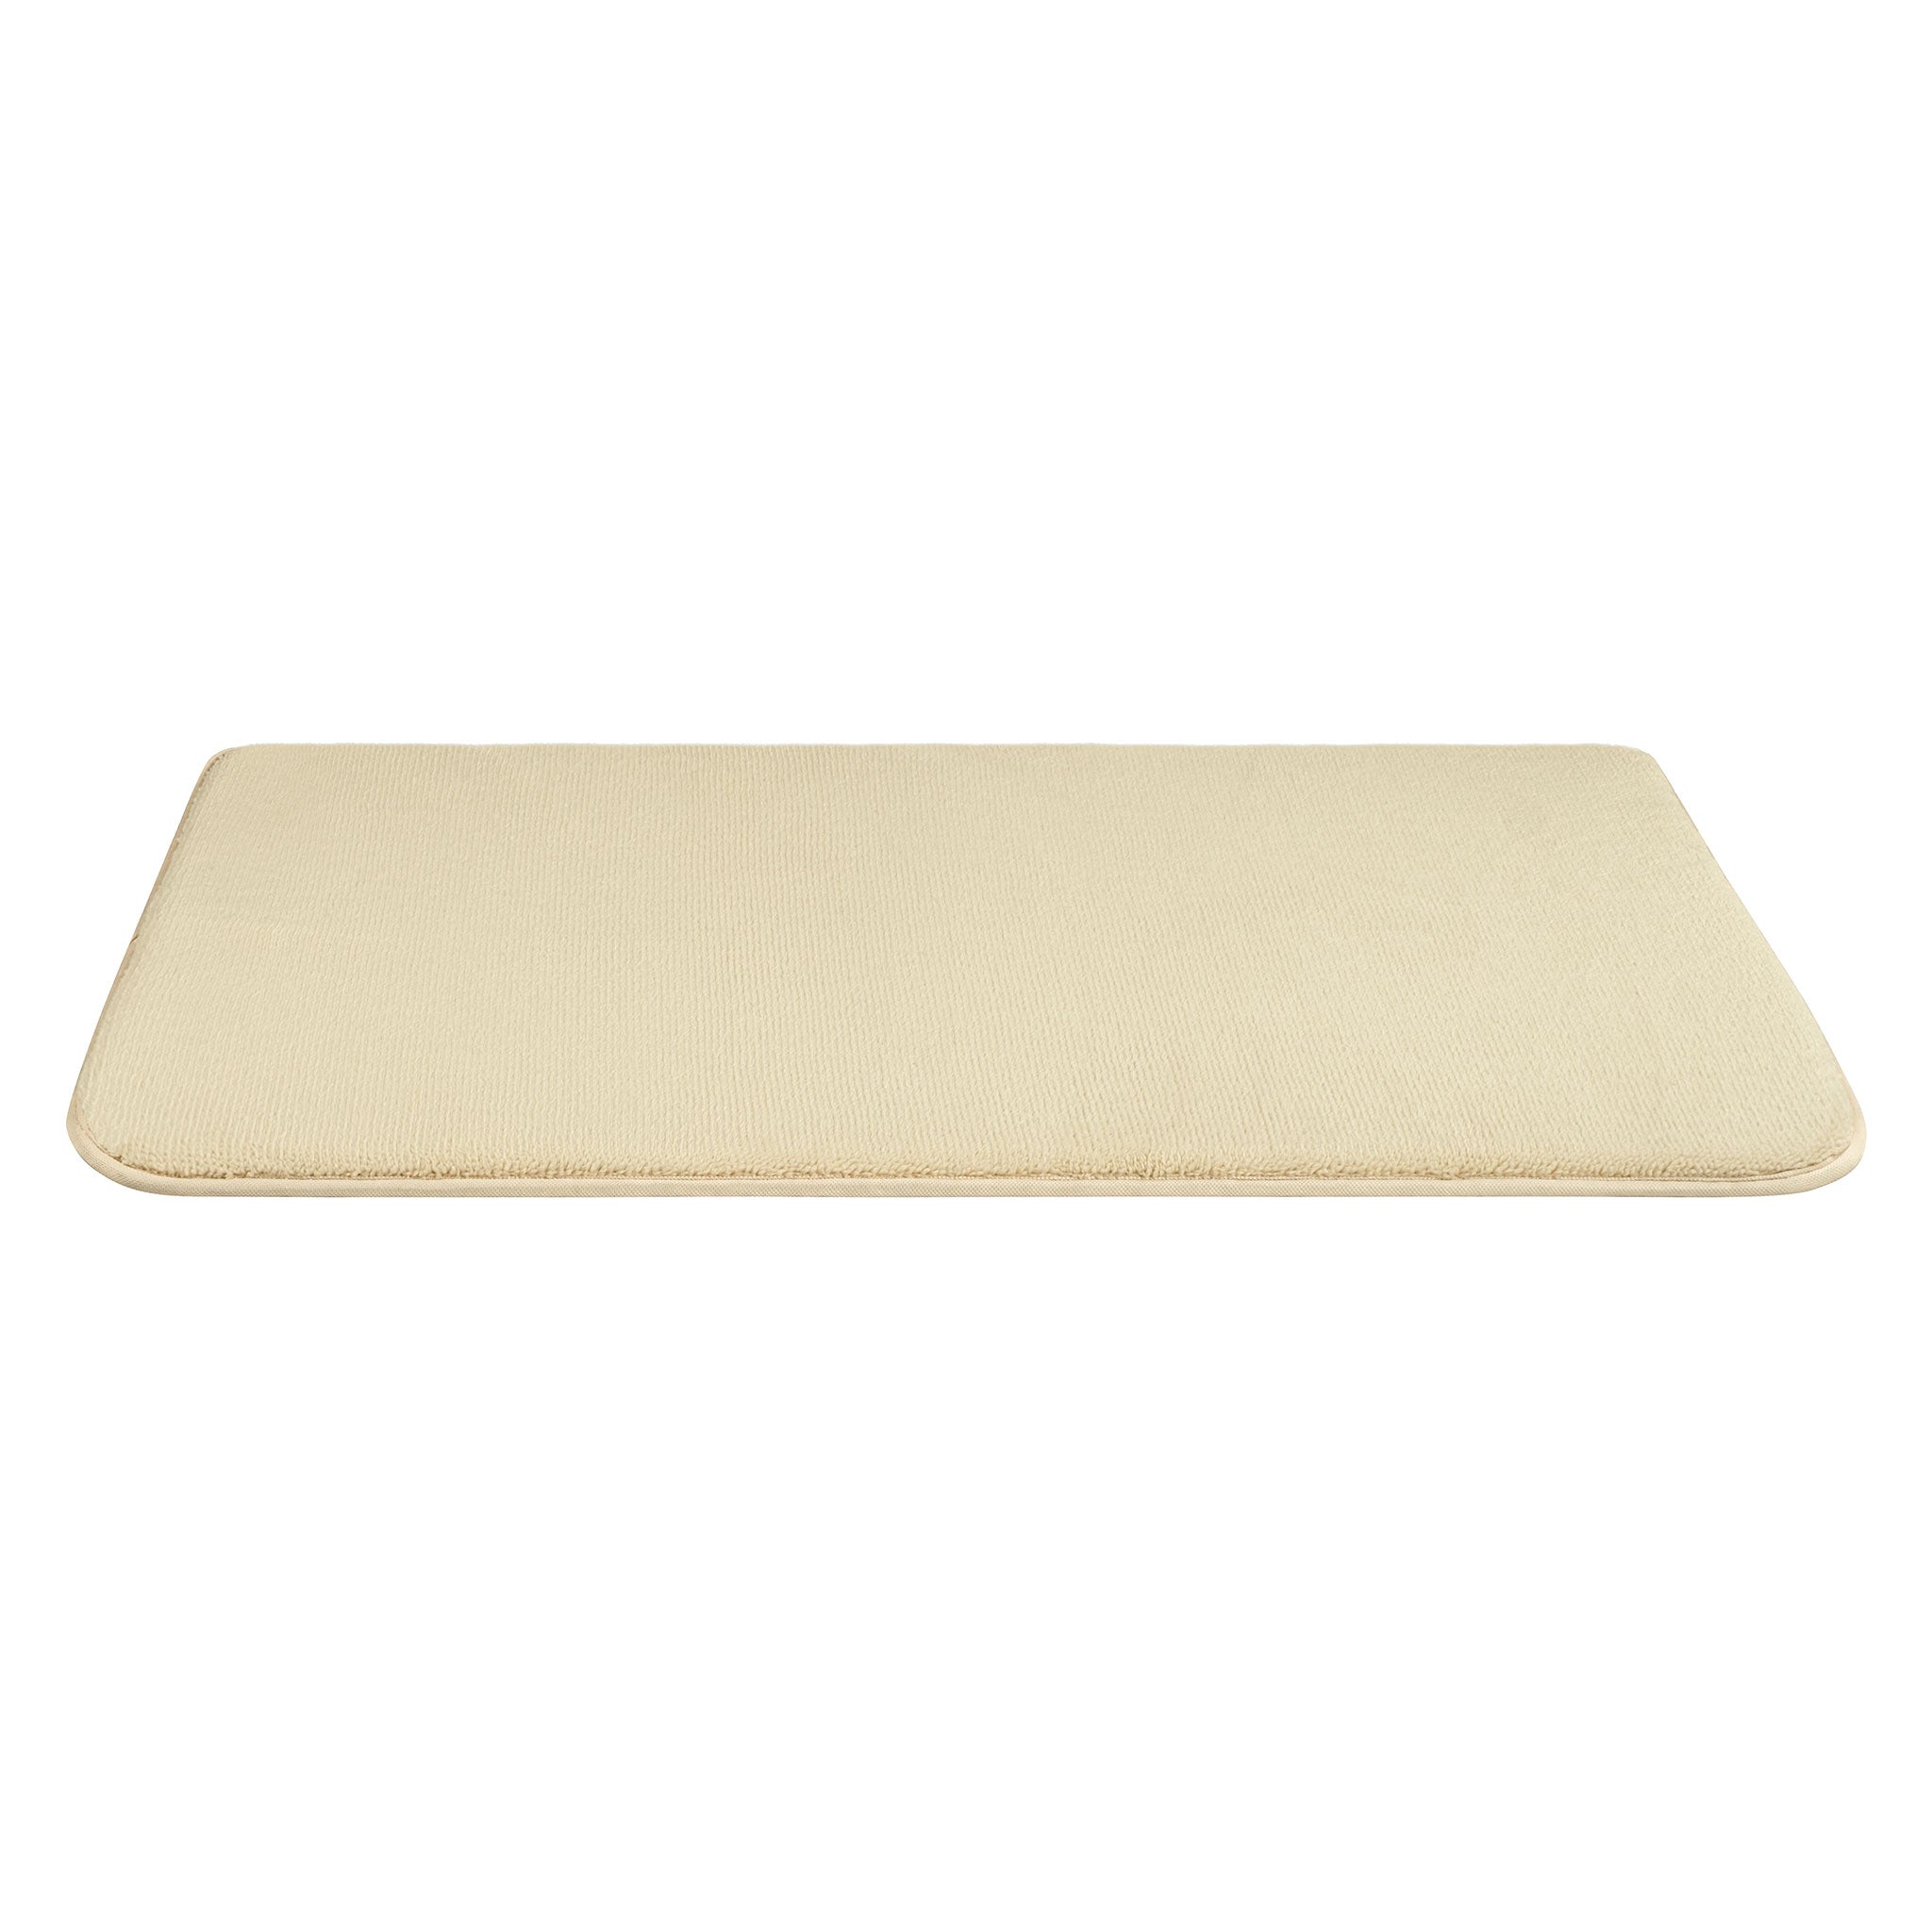 American Soft Linen - Fluffy Foamed Non-Slip Bath Rug-21x32 Inch - Sand-Taupe - 6